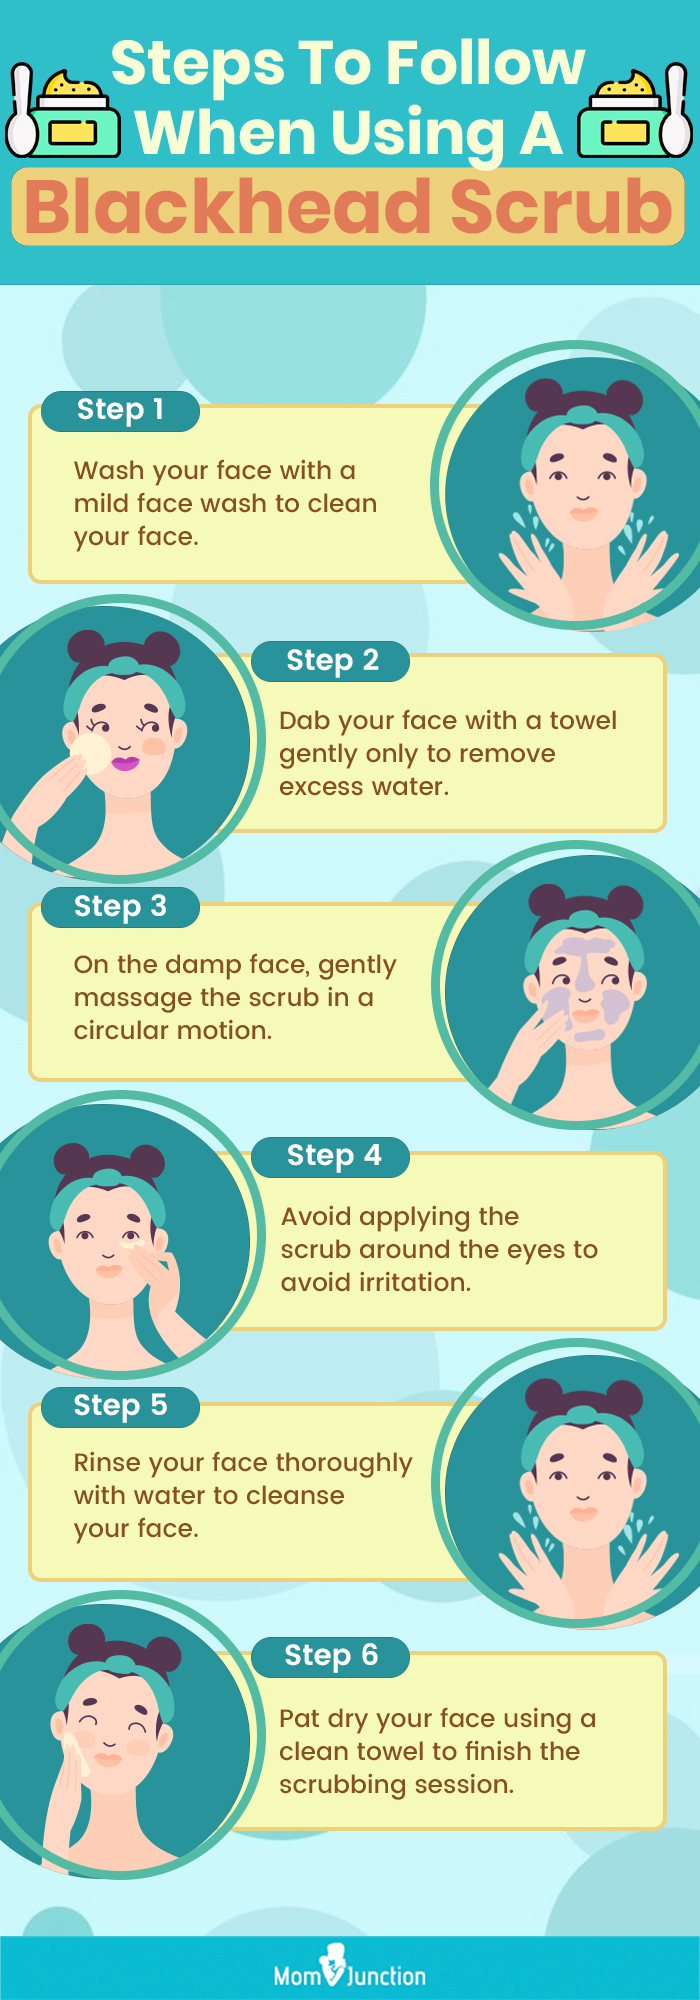 Steps To Follow When Using A Blackhead Scrub (infographic)